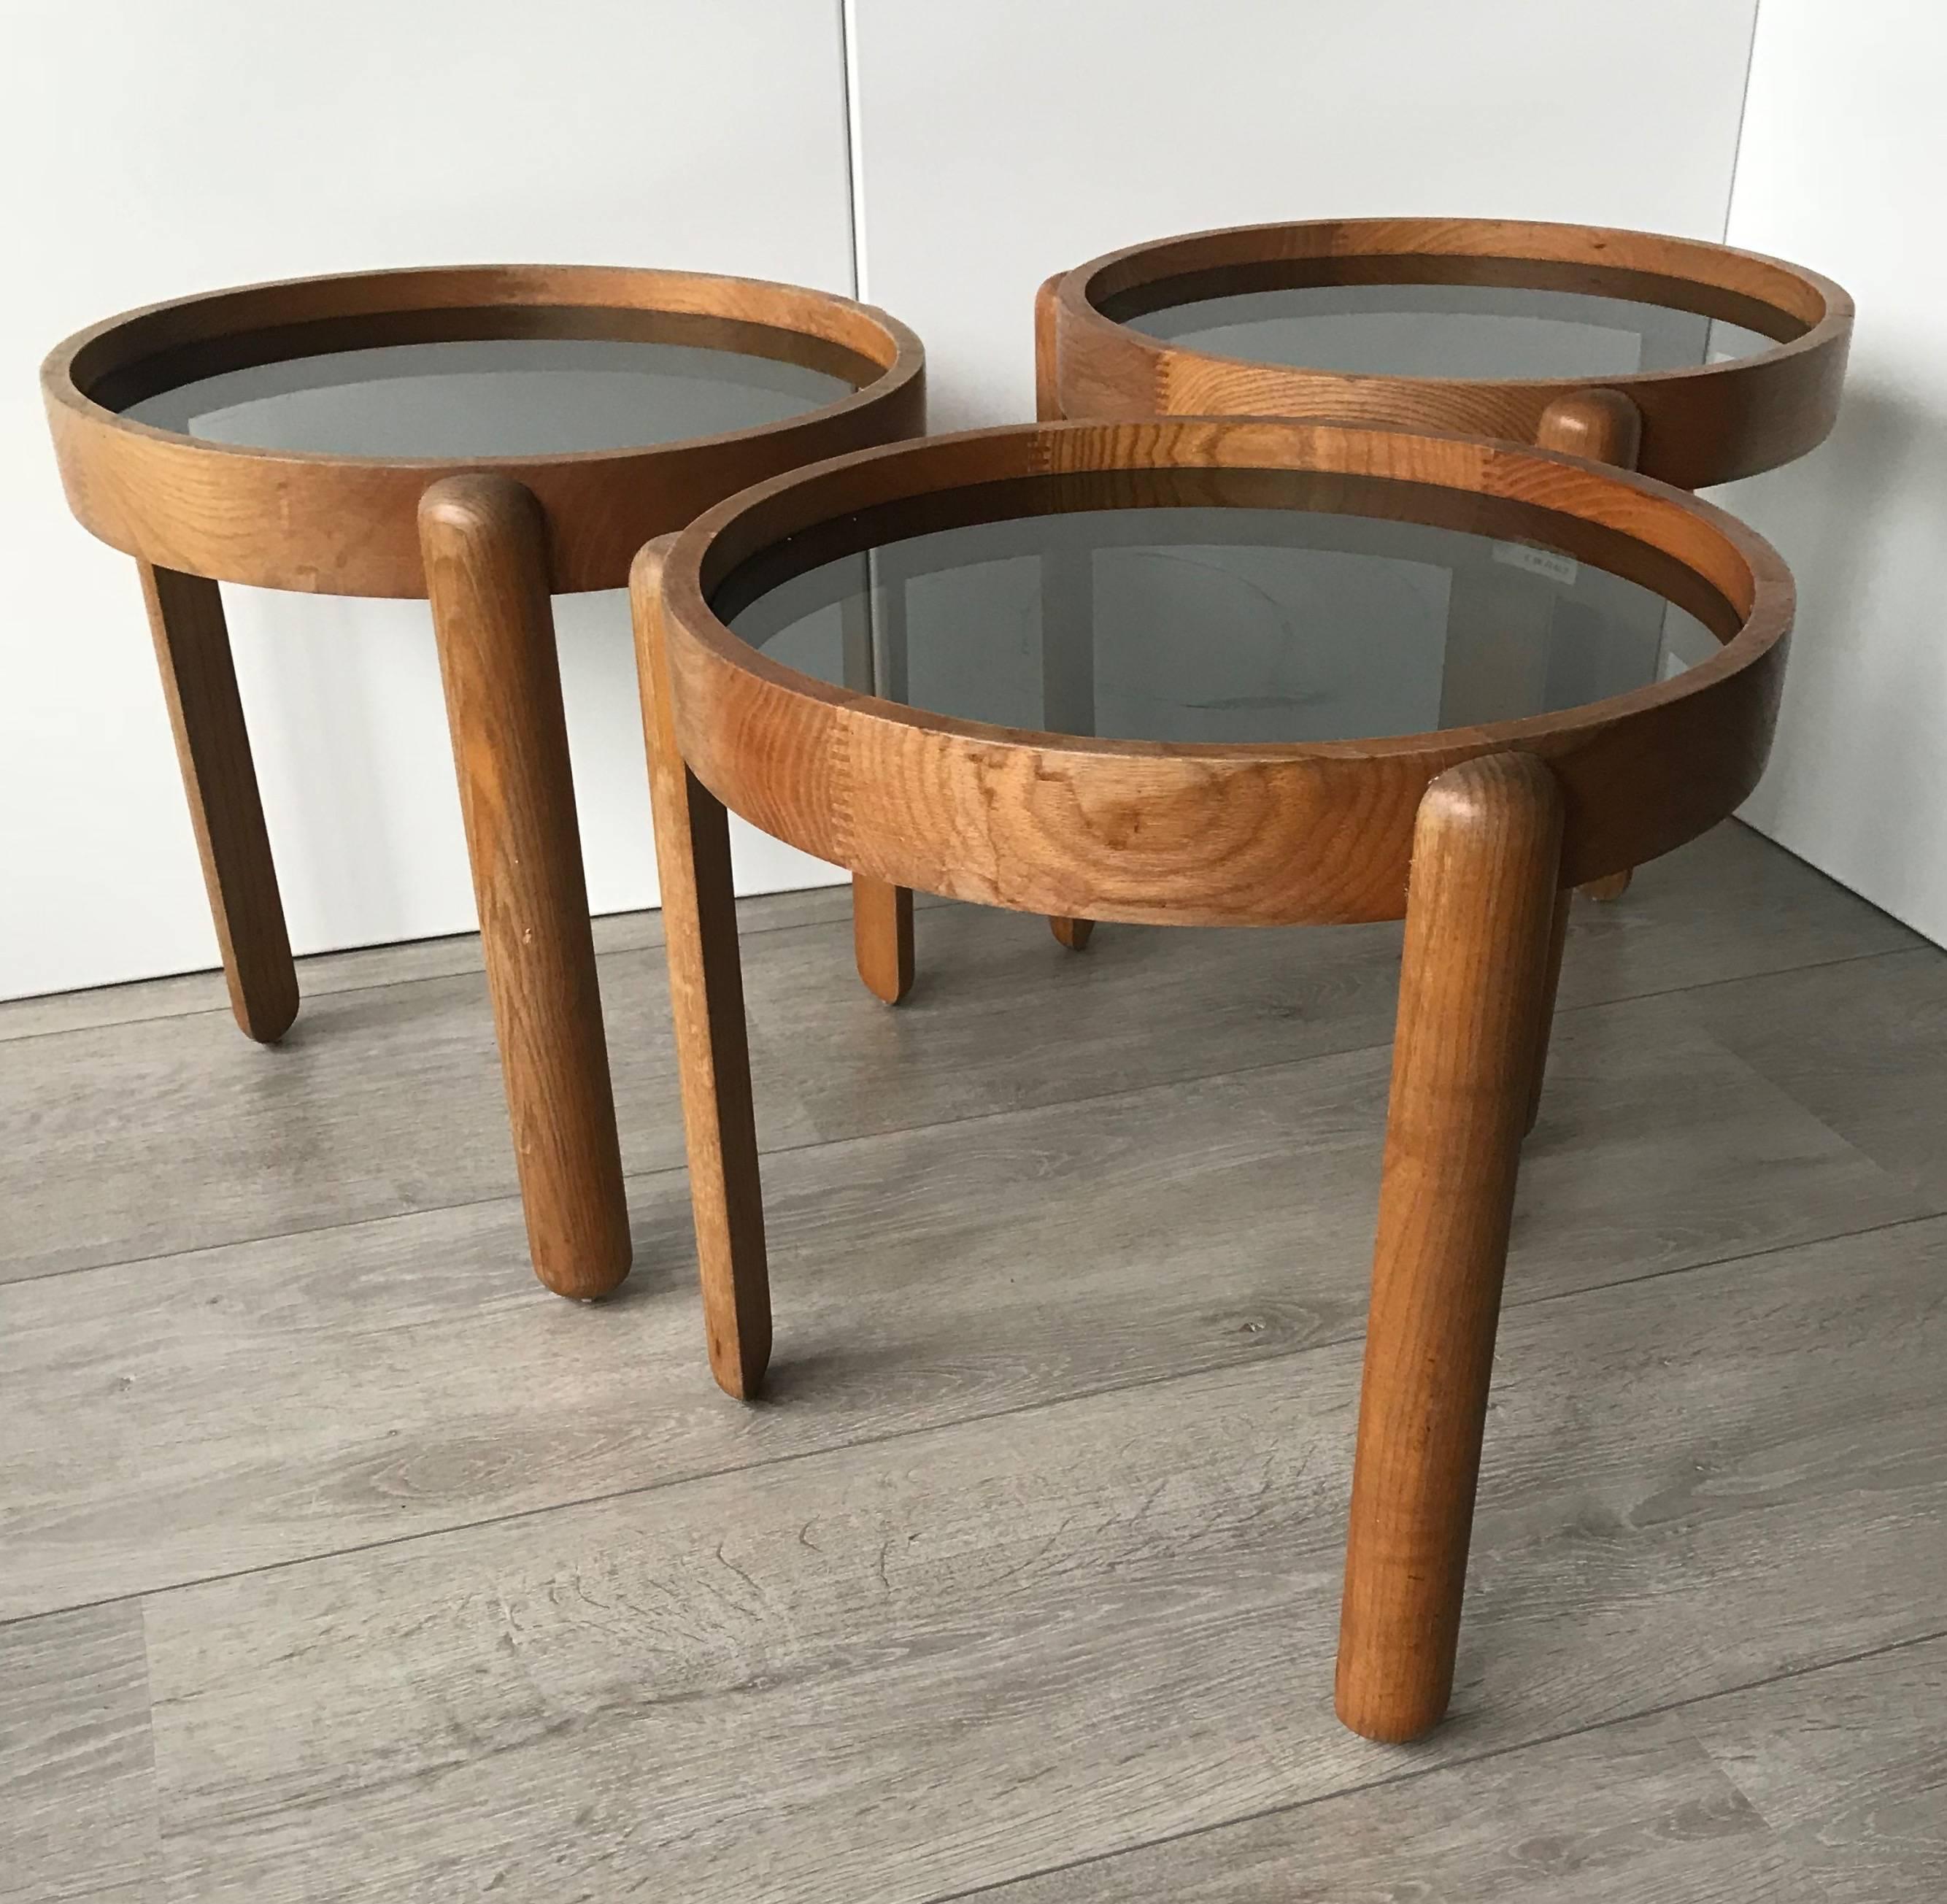 20th Century Italian Design Circular Set of Tables by Porada Arredi Cabiate, Wood and Glass